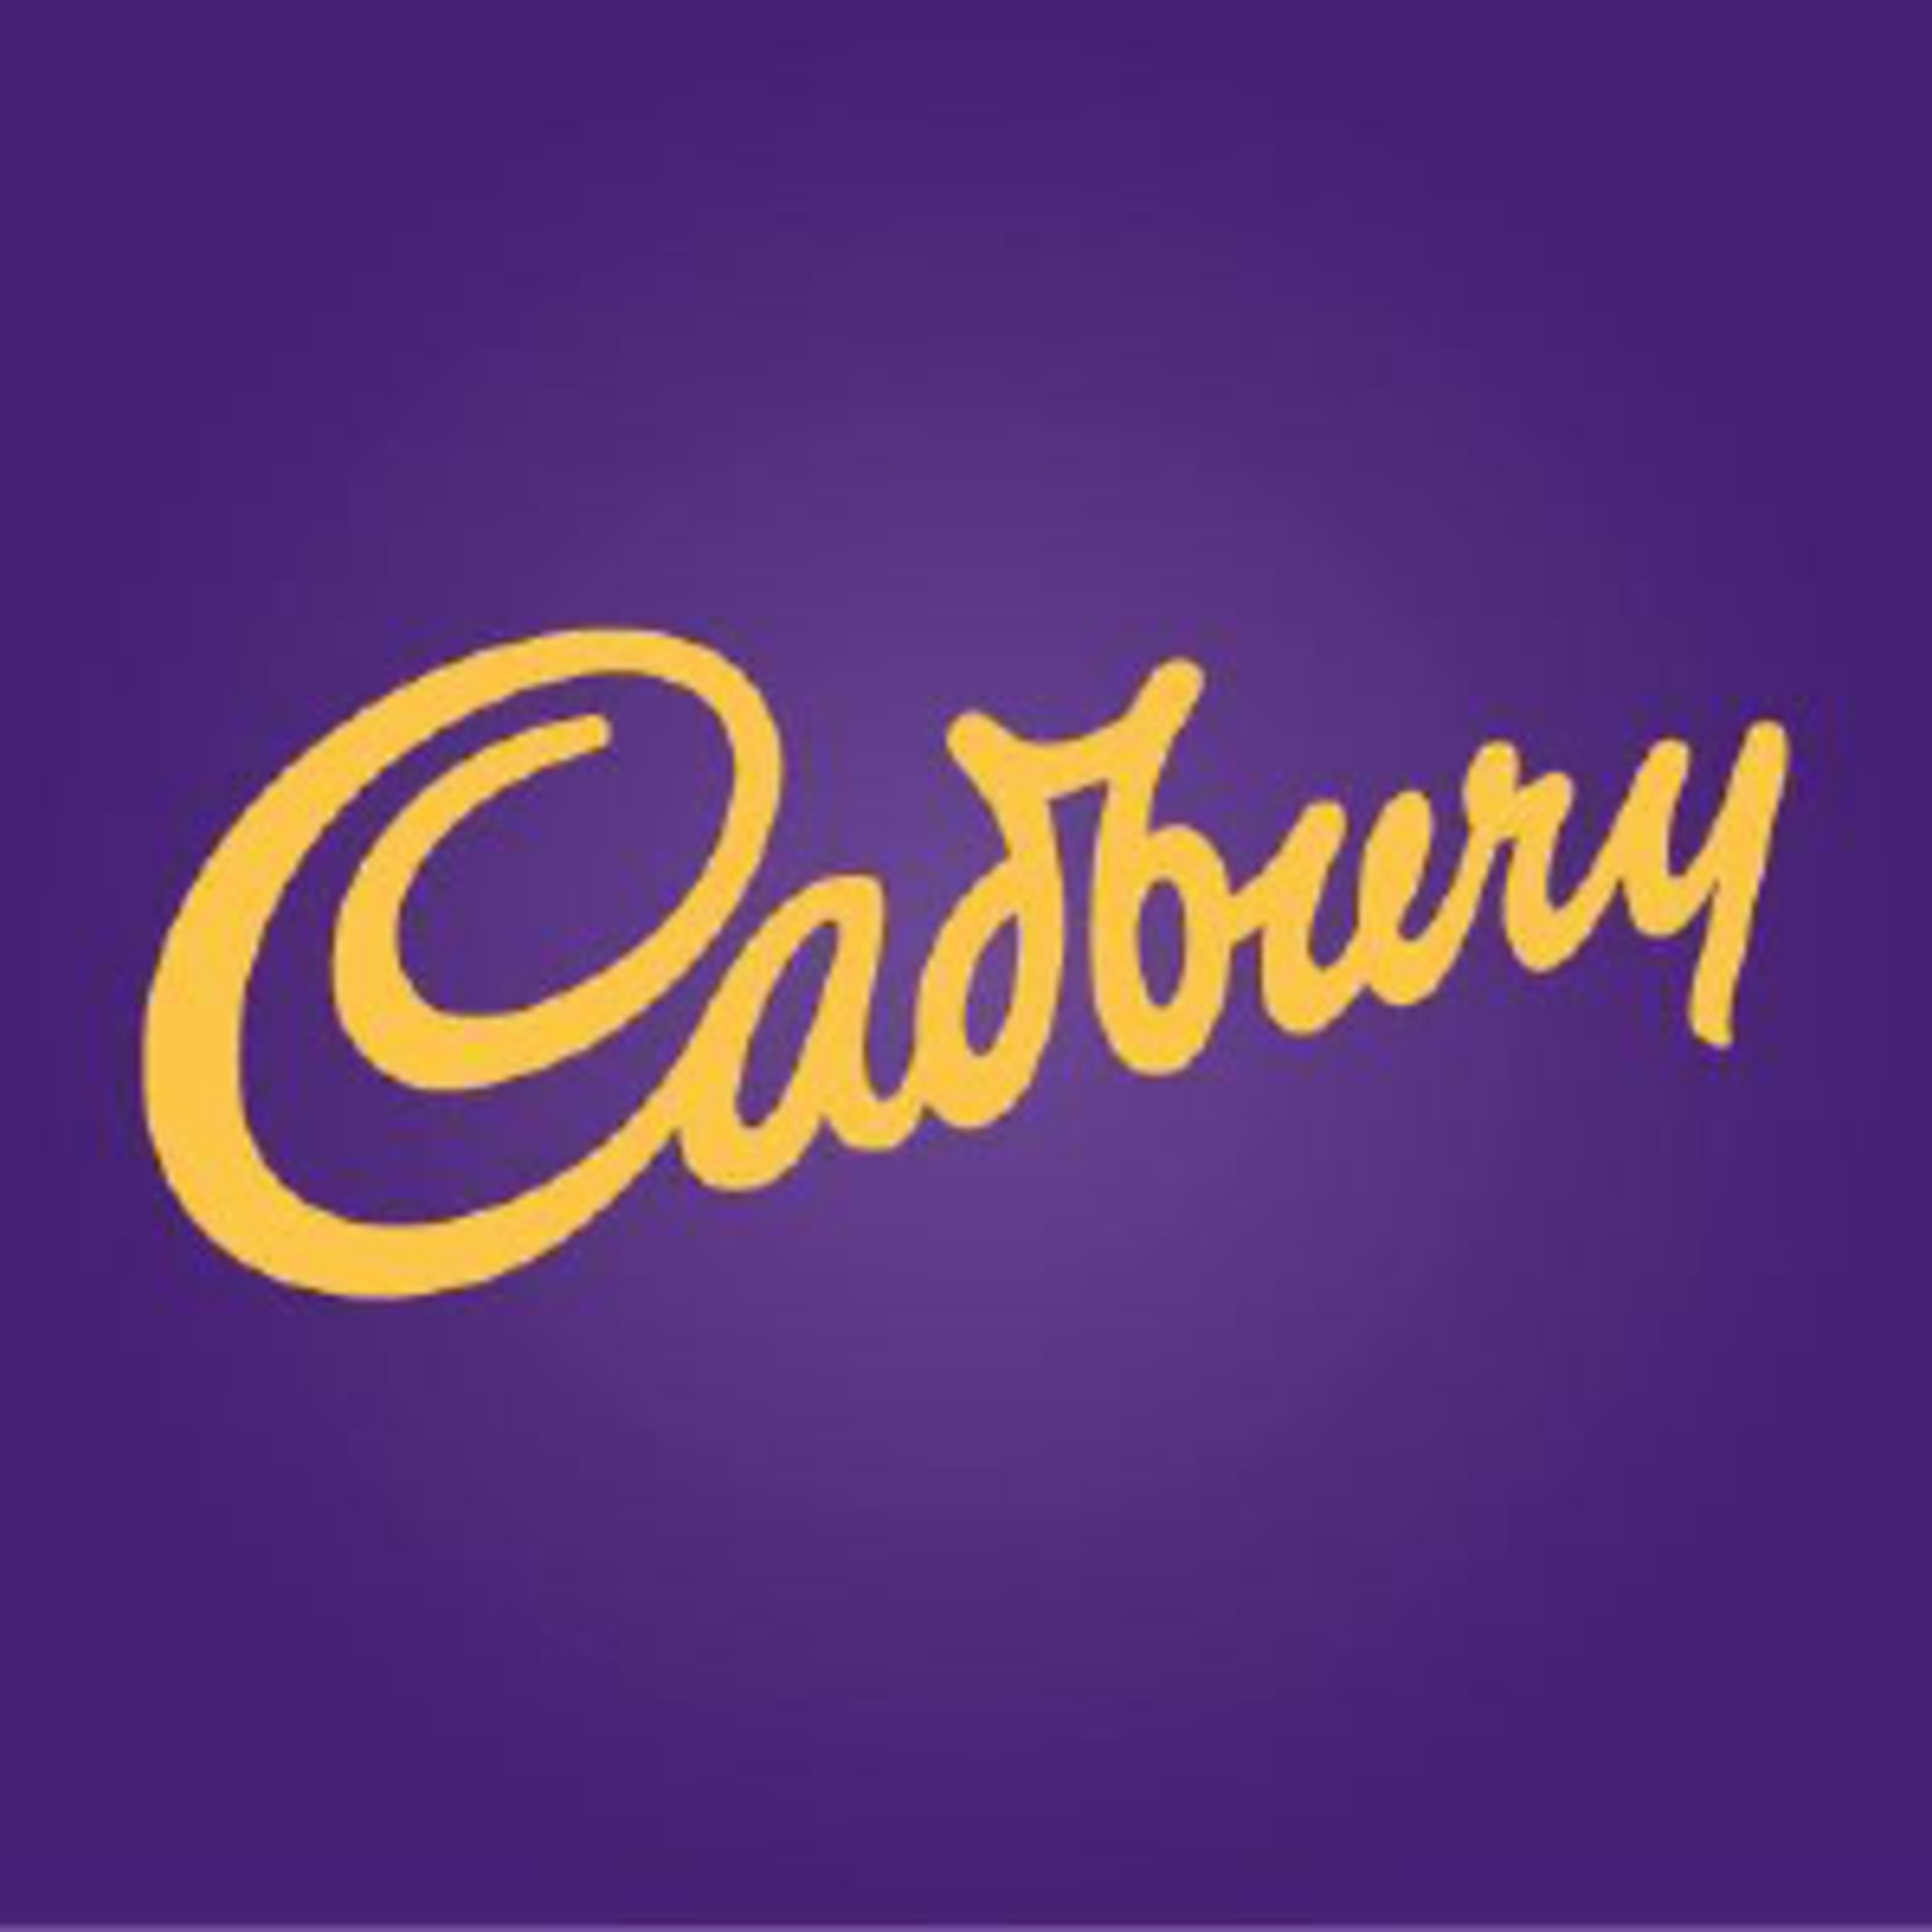 Cadbury Gifts Direct Code